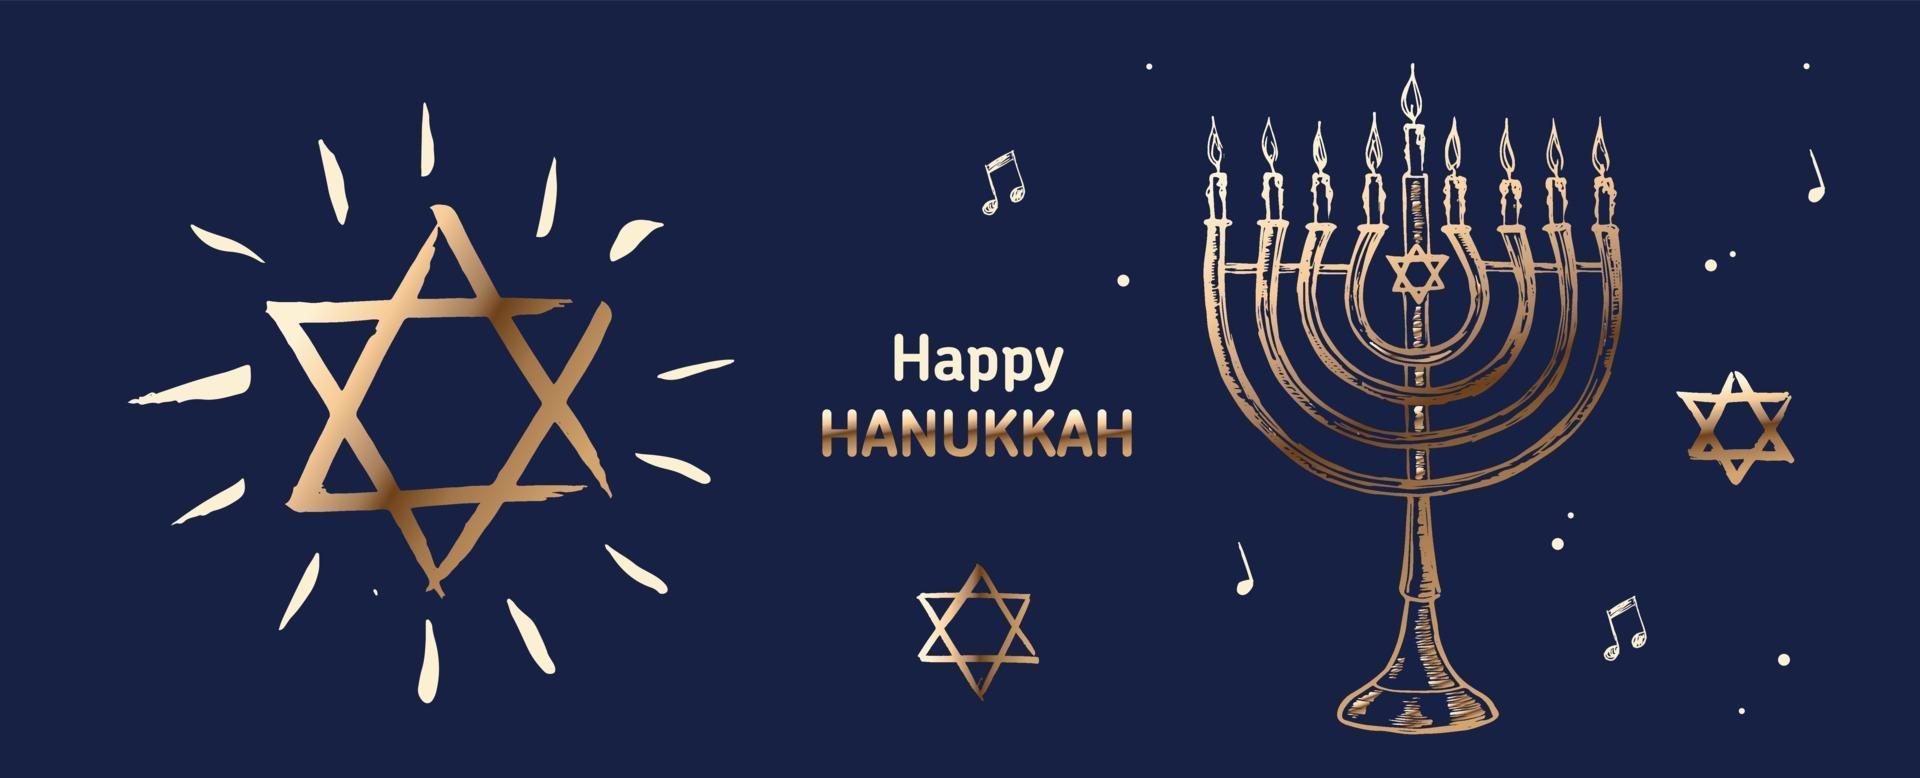 Hanukkah blue background with holiday candles, Hebrew David stars. Vector illustration.